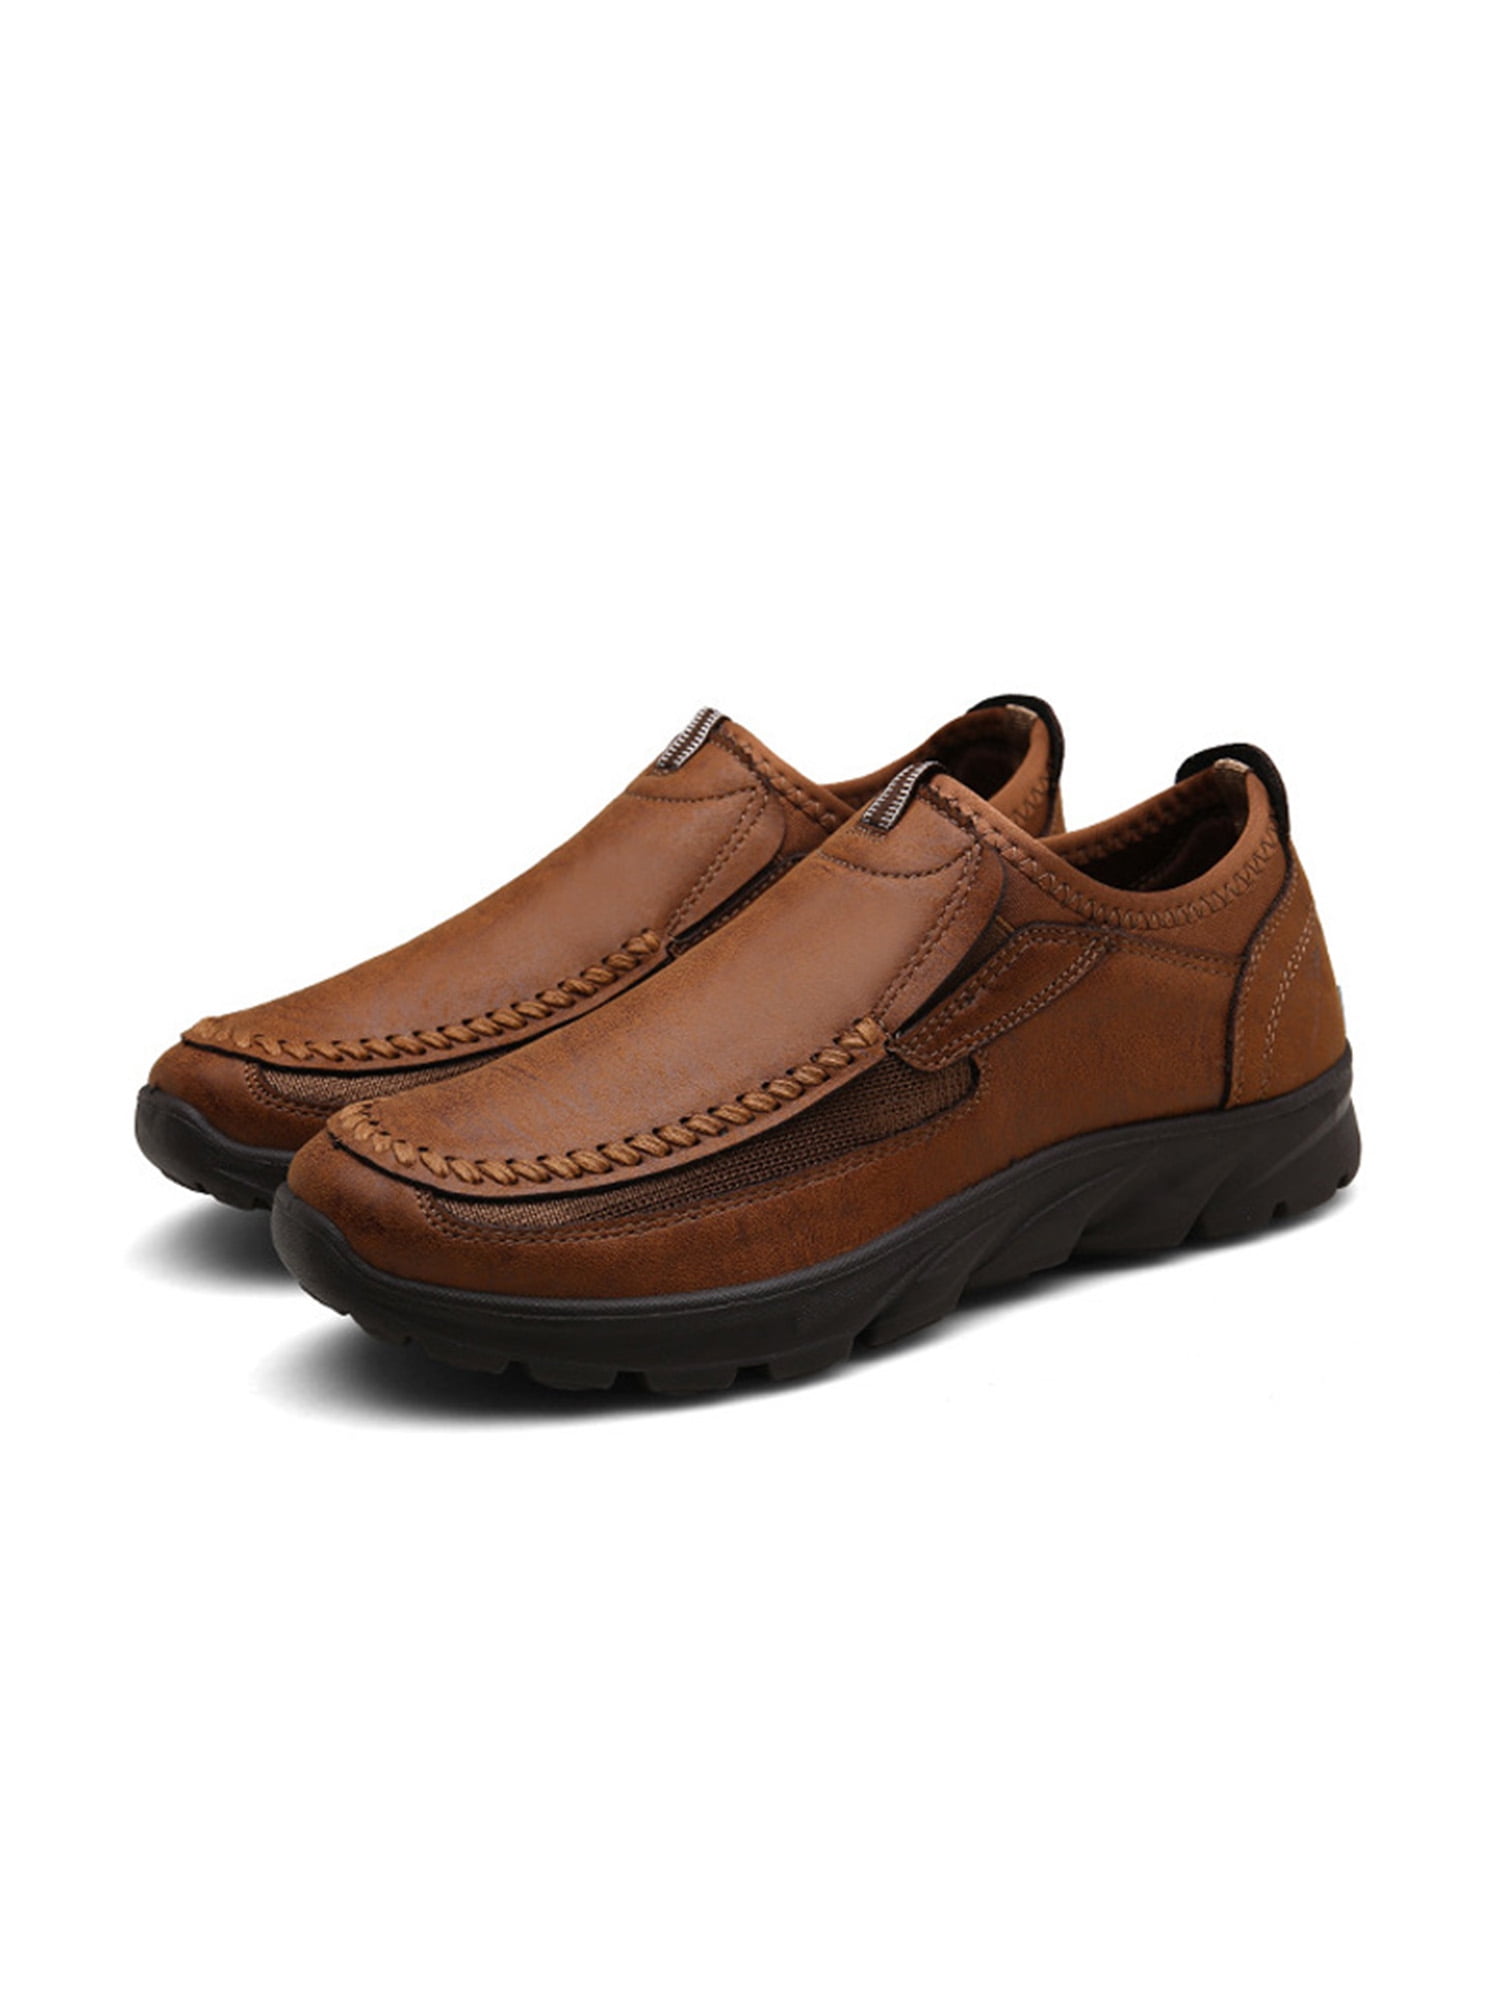 Harsuny Men's Loafers Comfortable Slip on Walking Business for Vintage ...